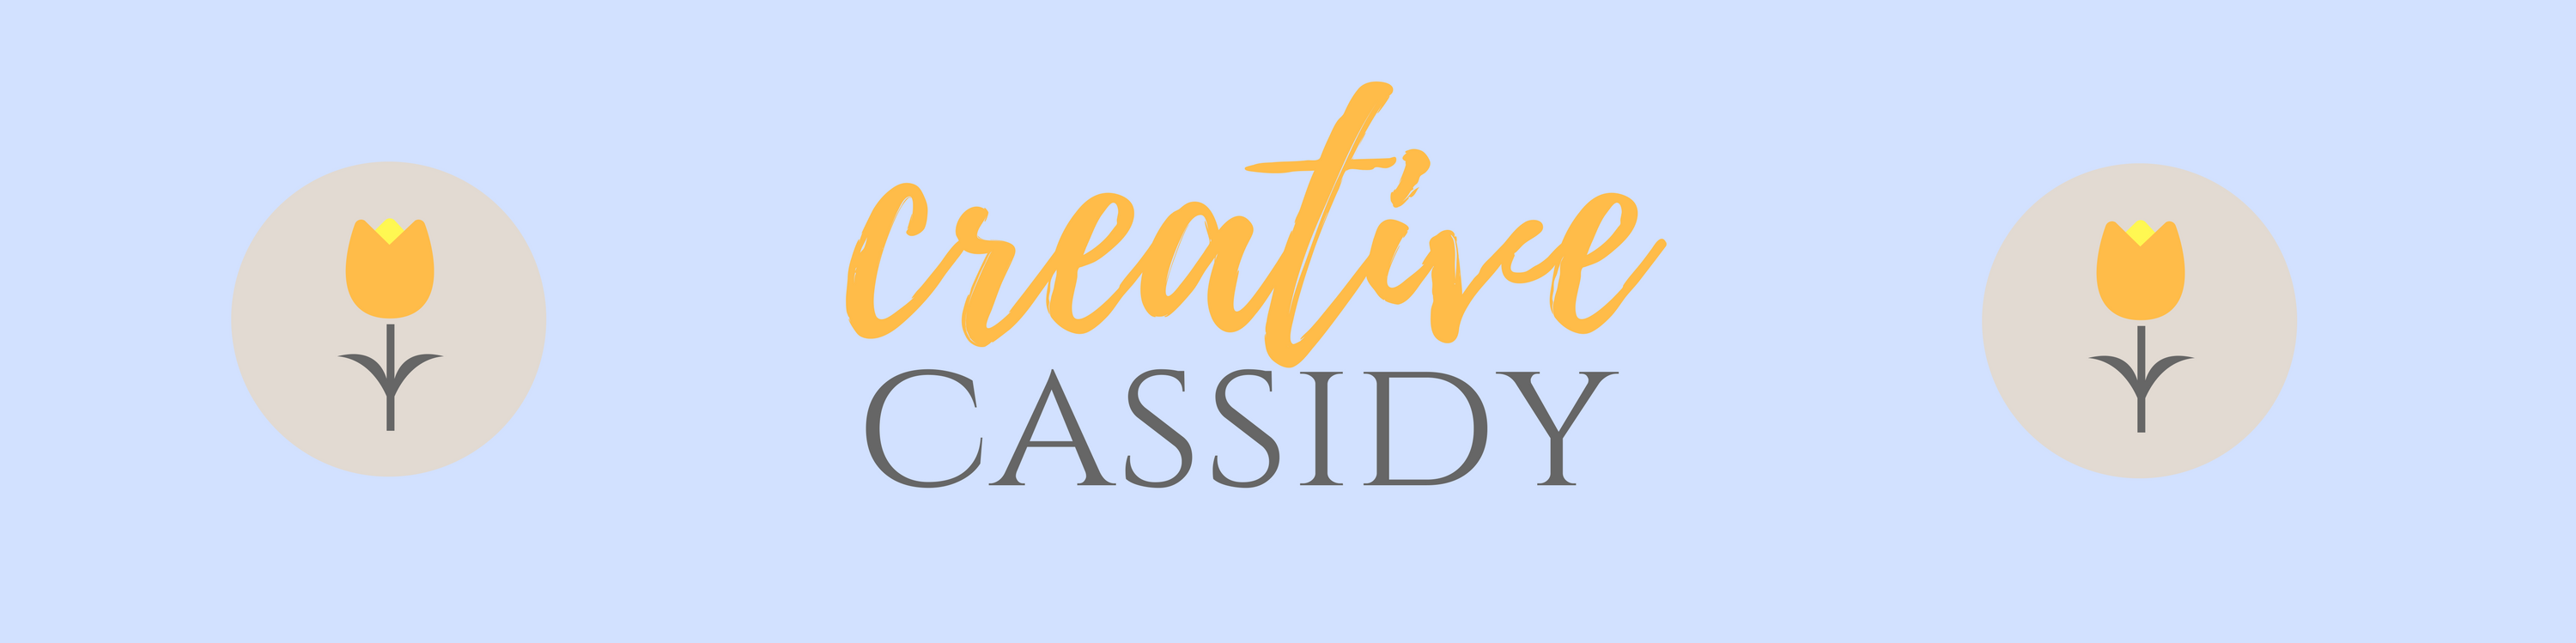 Creative Cassidy